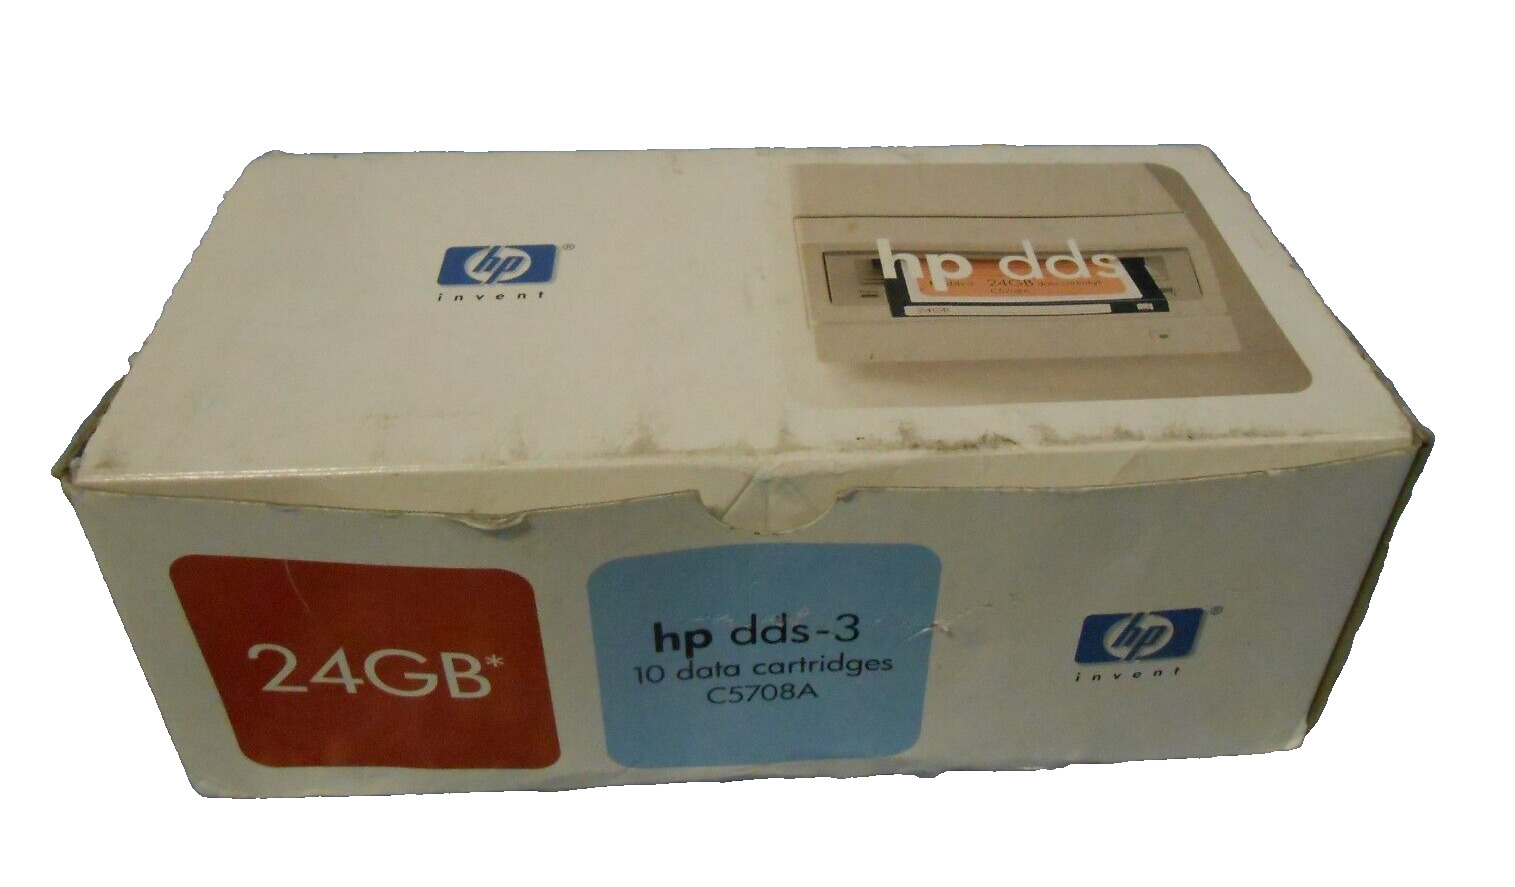 HP DDS-3 10 Data Cartridge 24GB C5708A